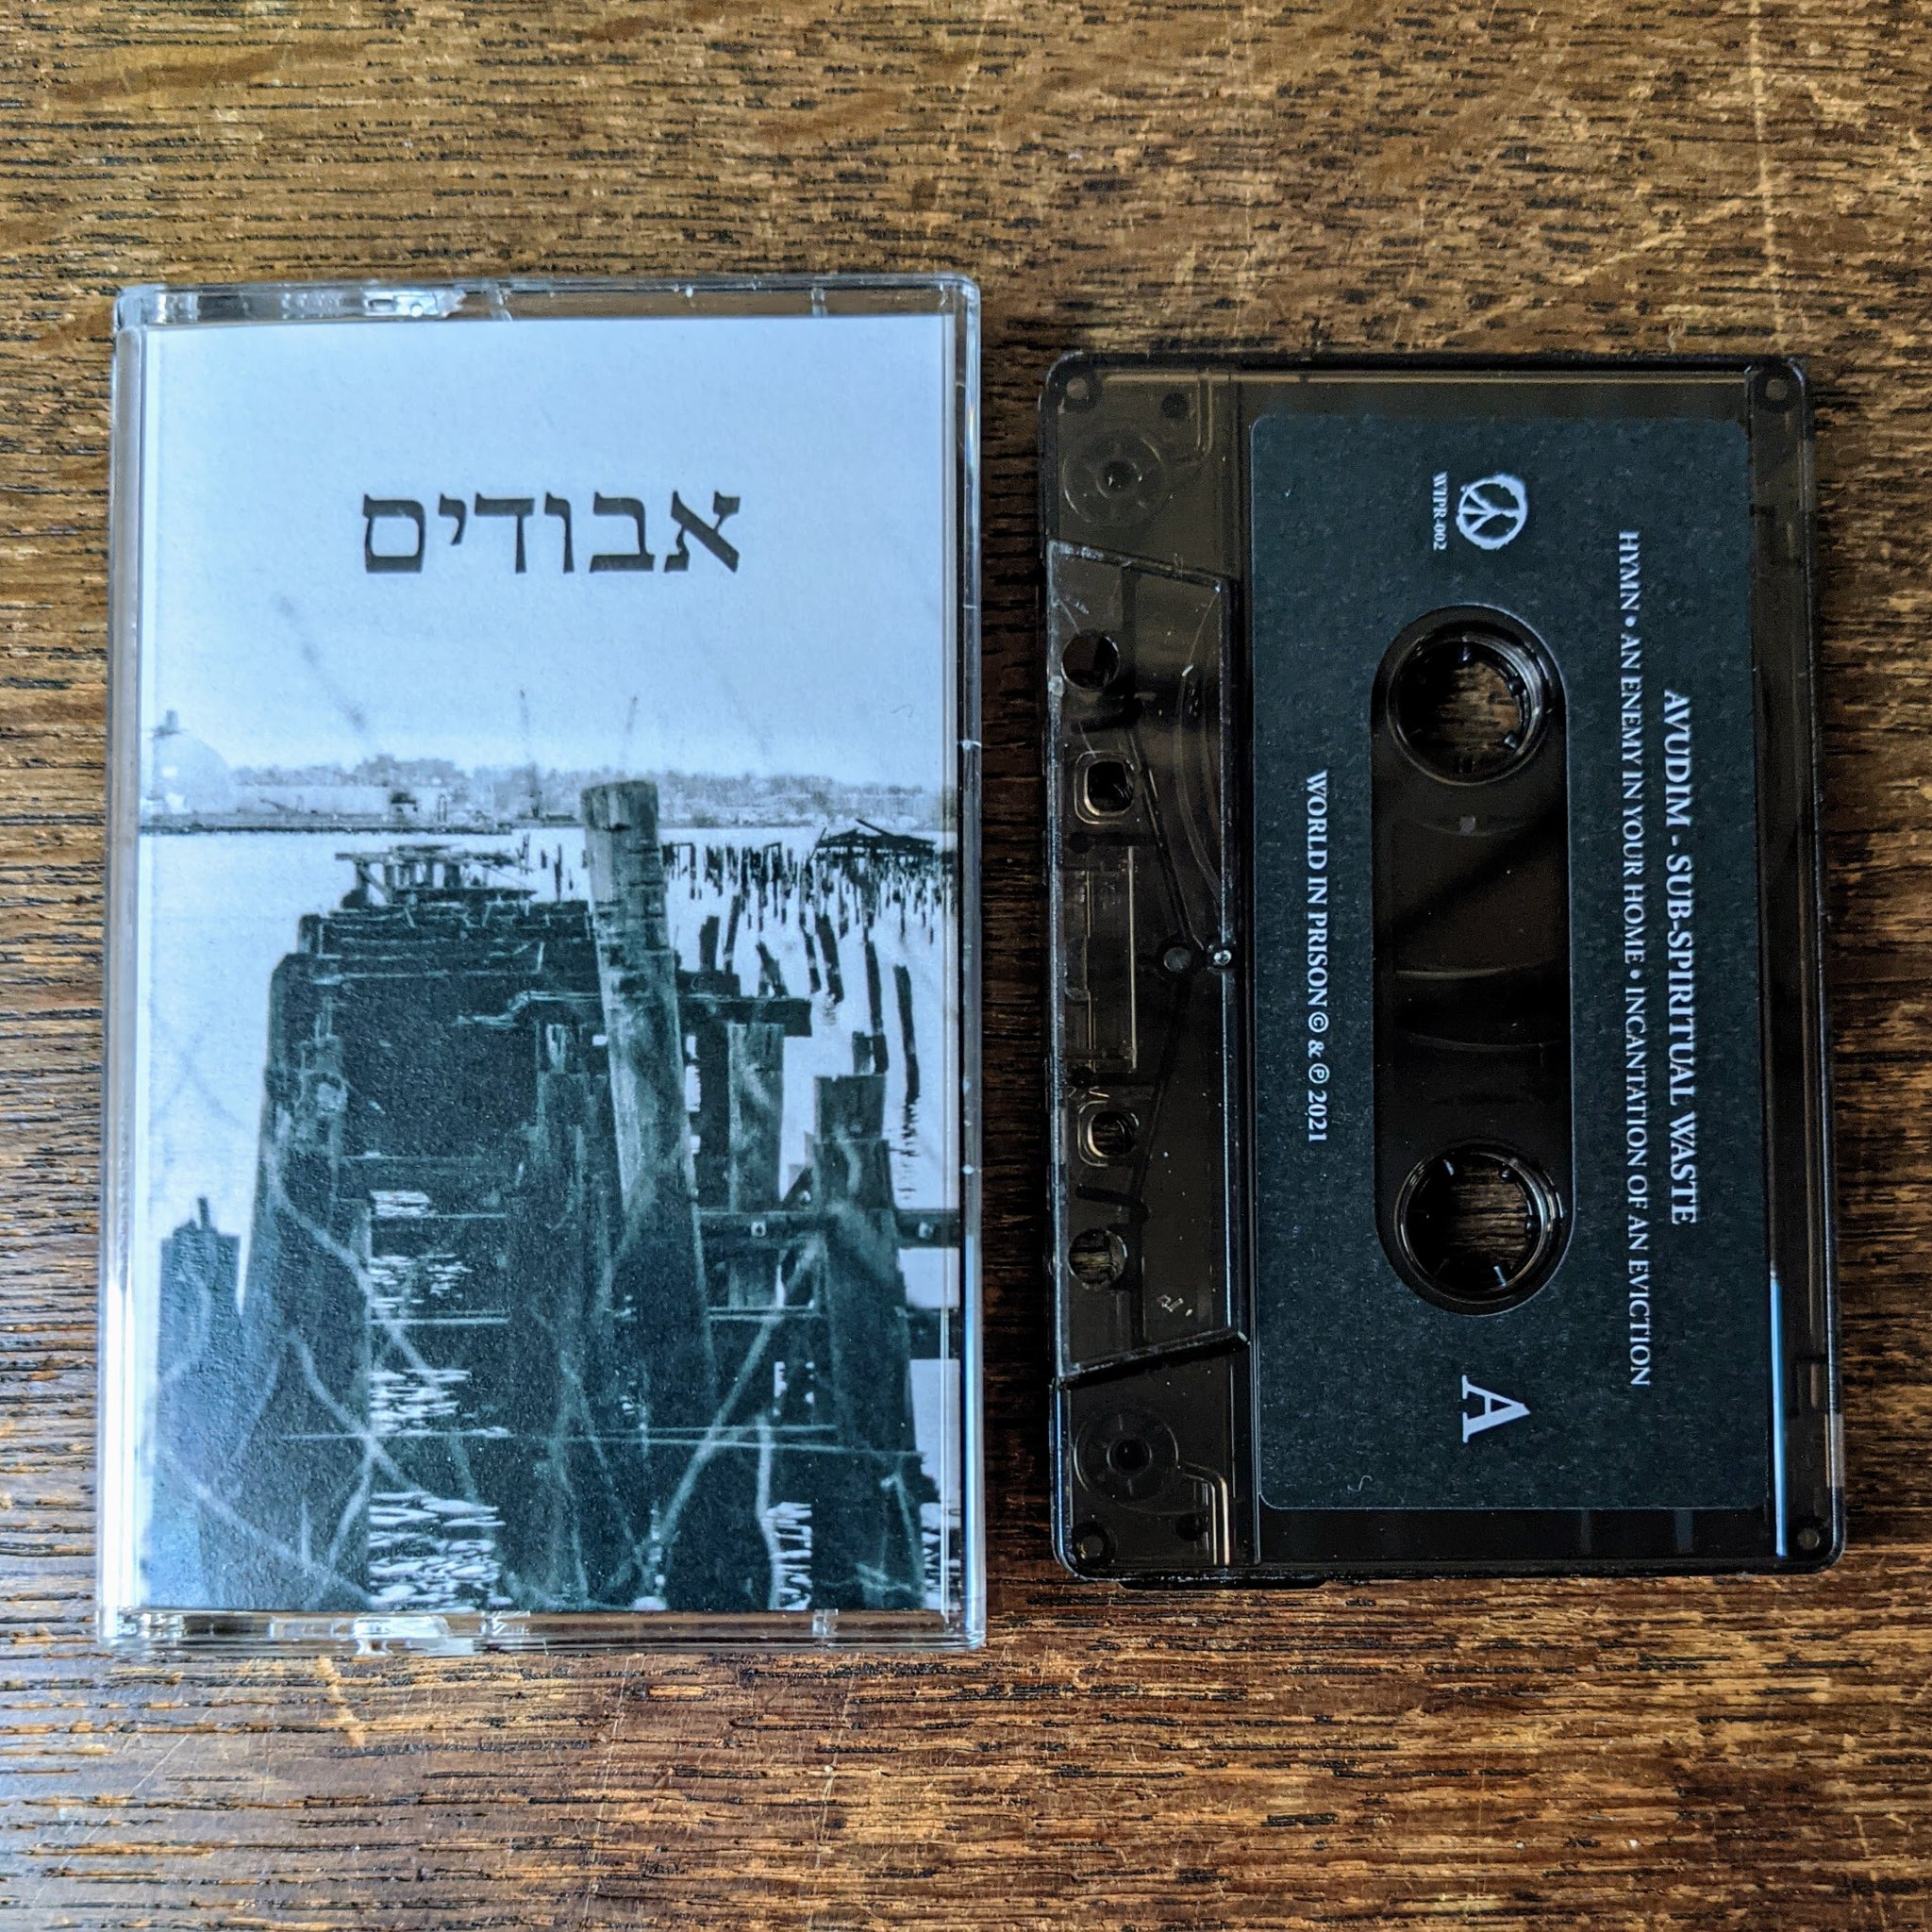 [SOLD OUT] AVUDIM "Sub-Spiritual Waste" Cassette Tape (Lim. 50)